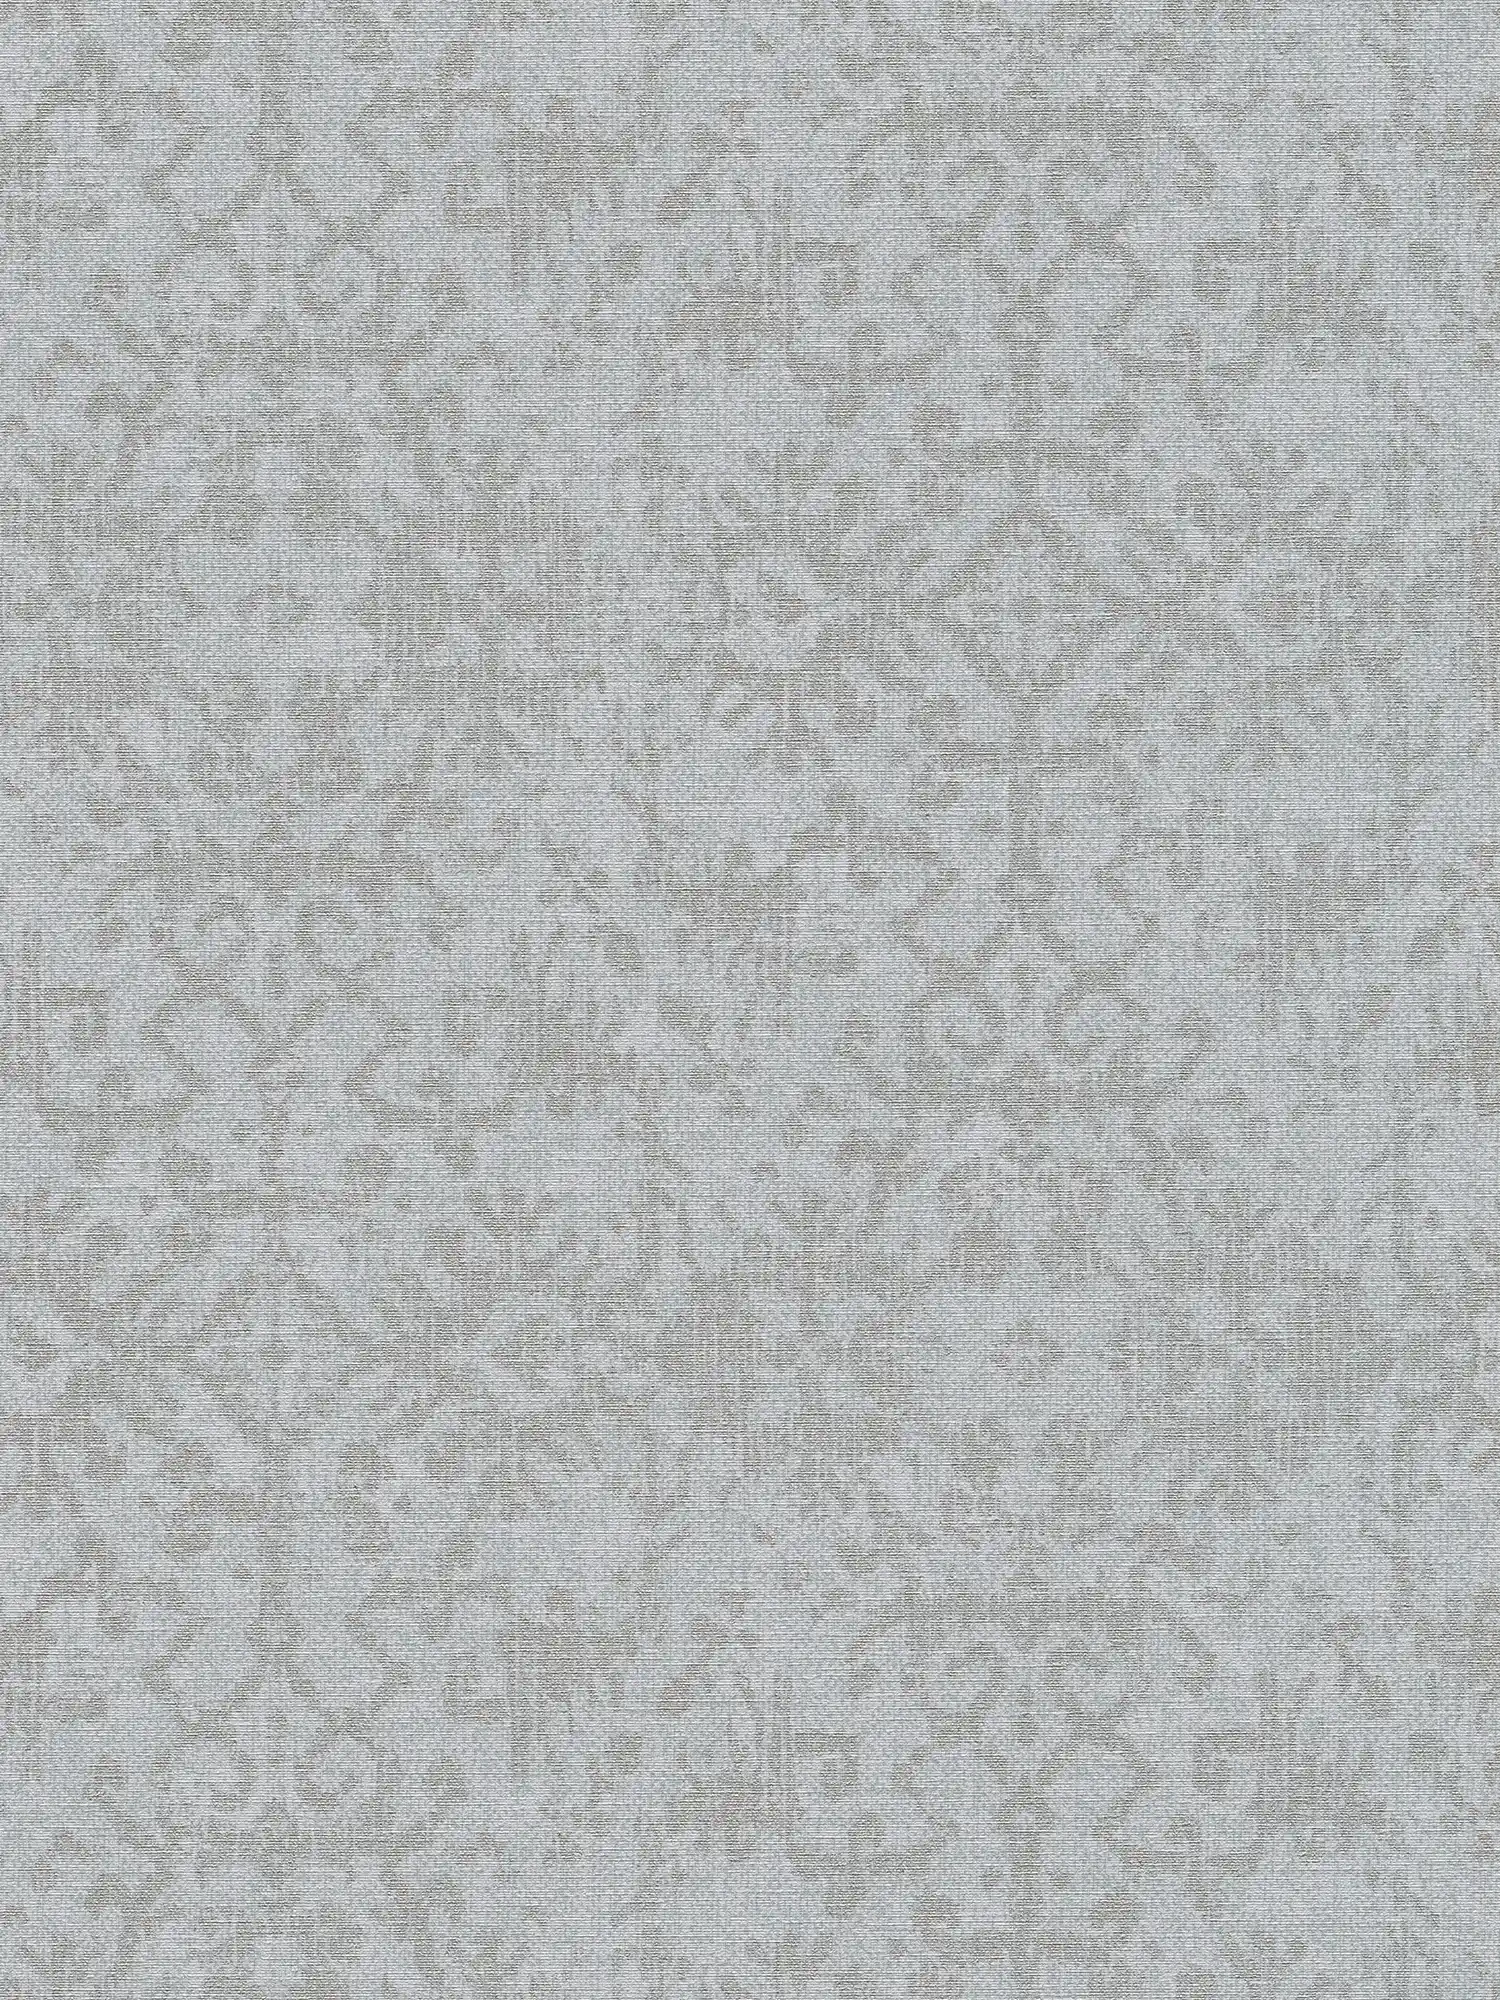 Textile optics wallpaper ethnic ornament pattern - grey
